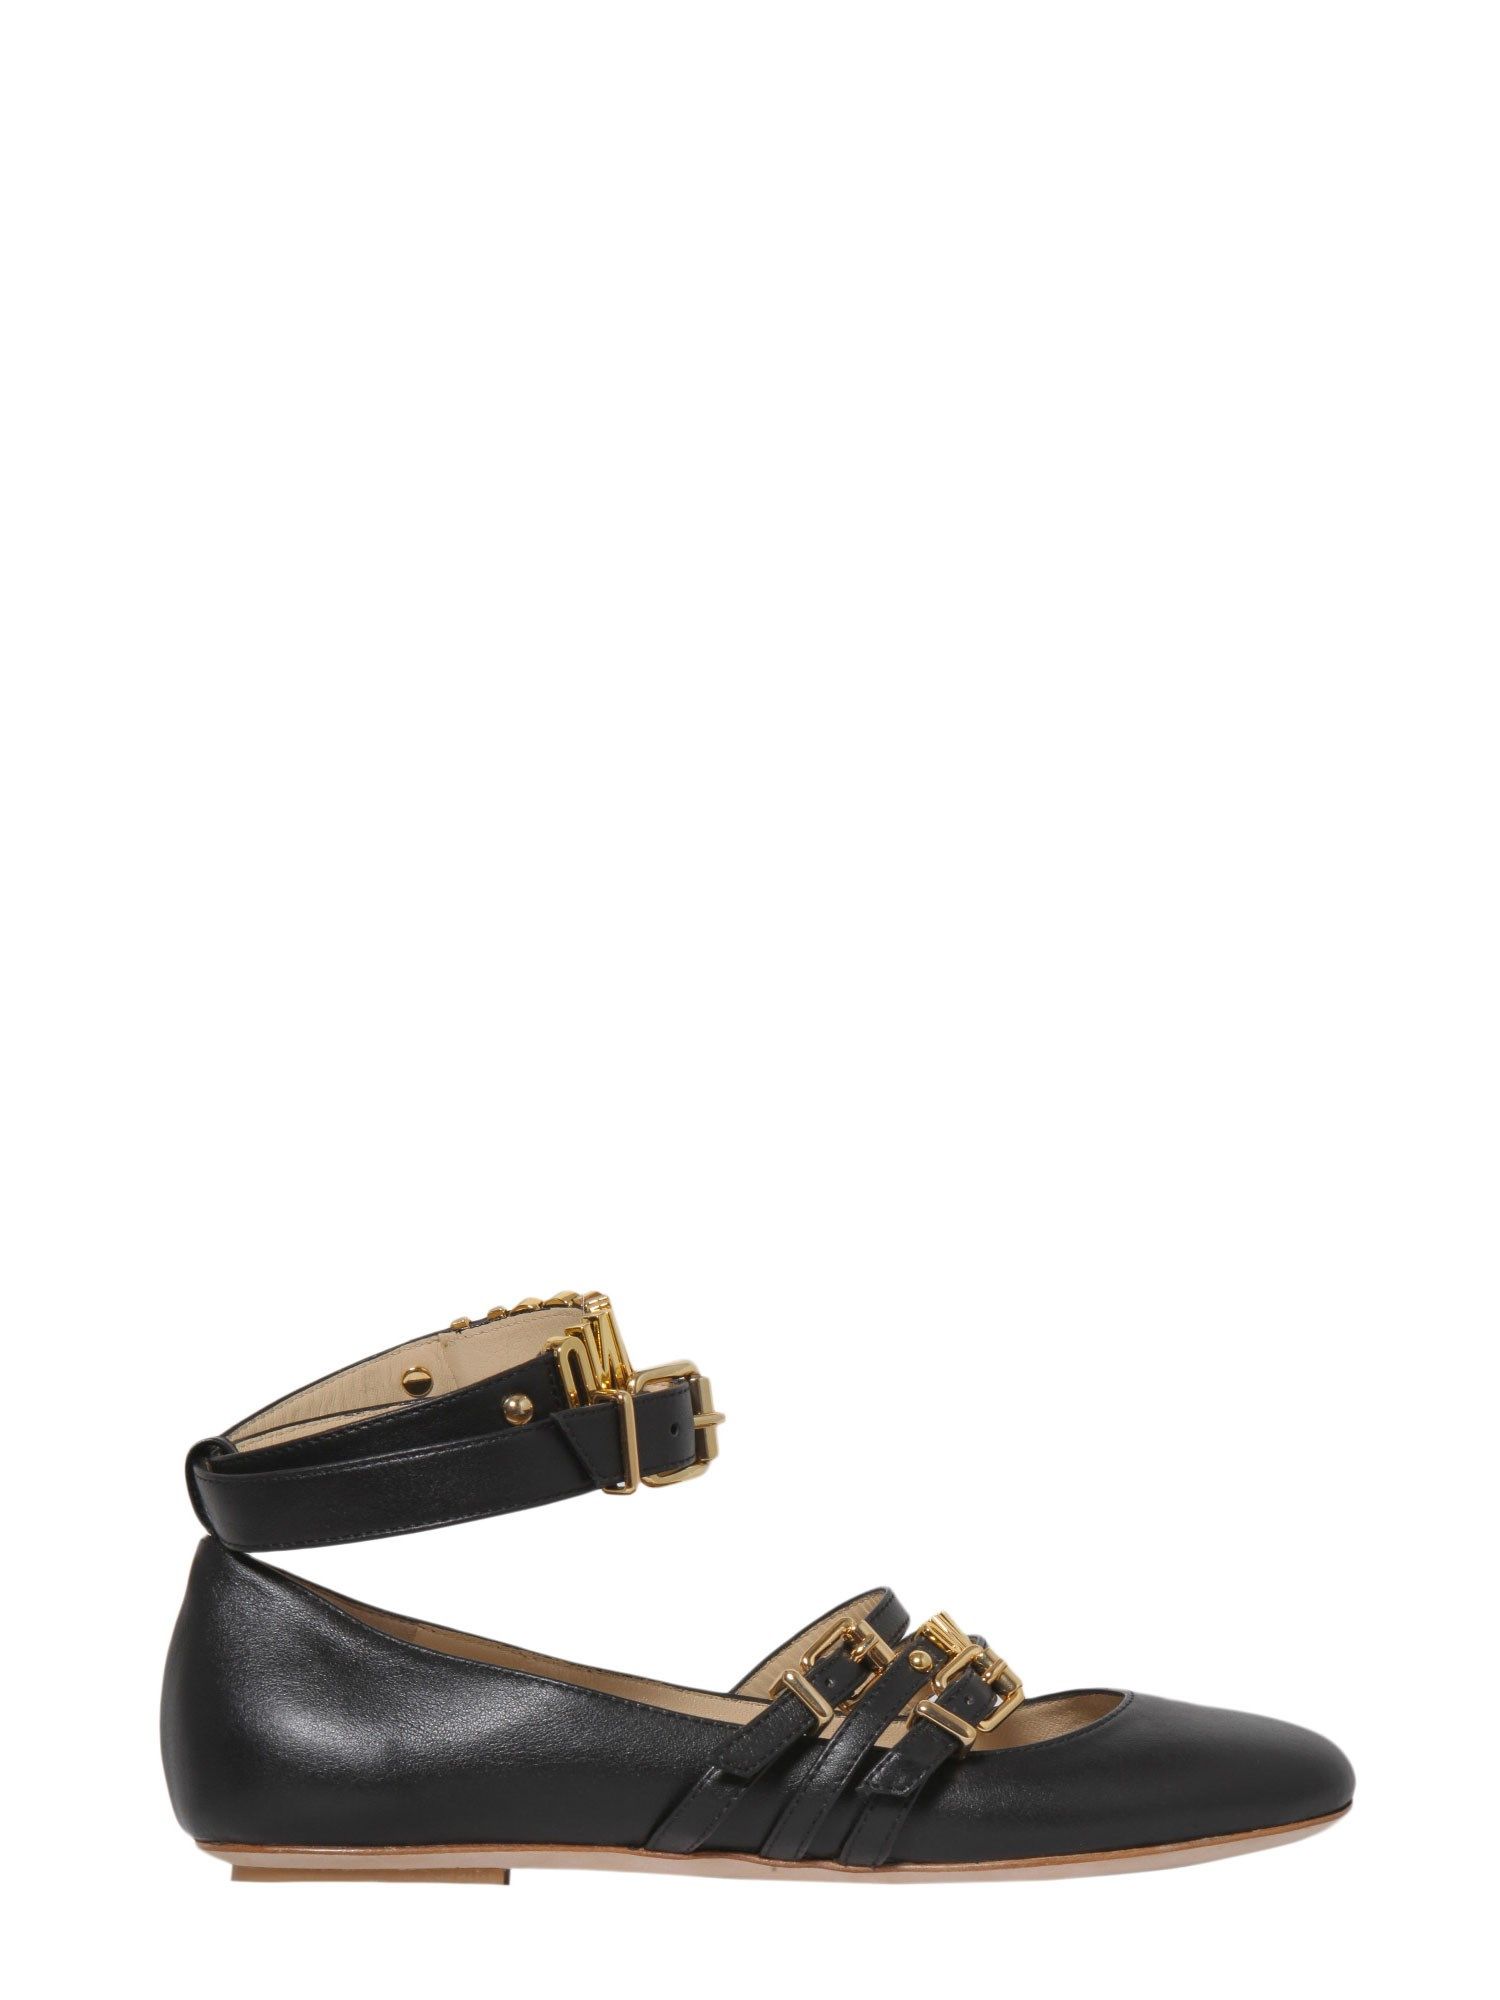 Moschino - Leather Flats - NERO, Women's Flat Shoes | Italist